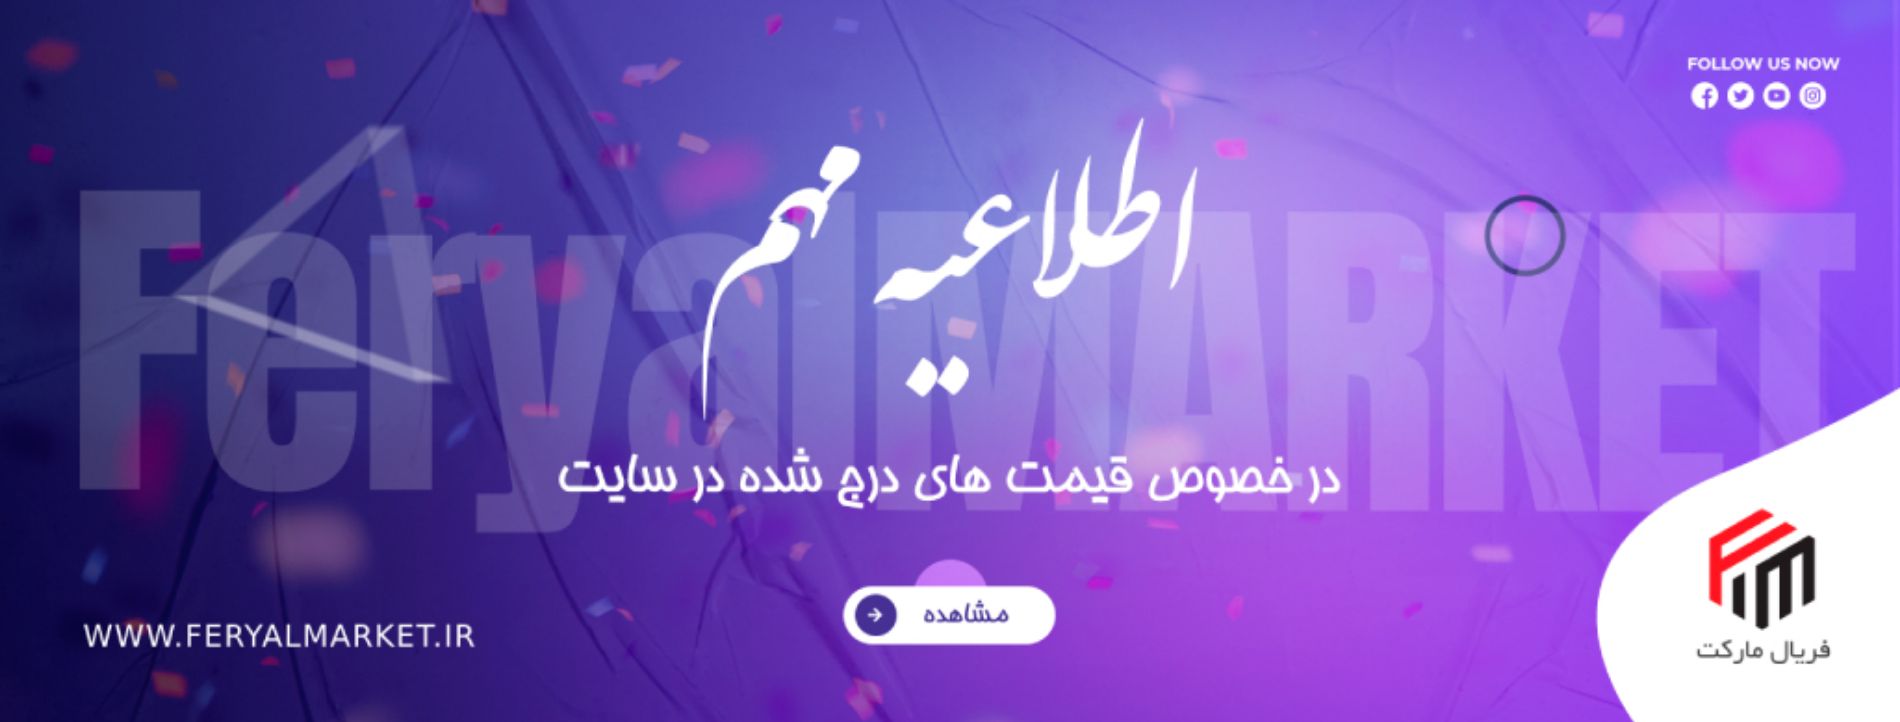 desktop banner فریال پخش سپاهان 